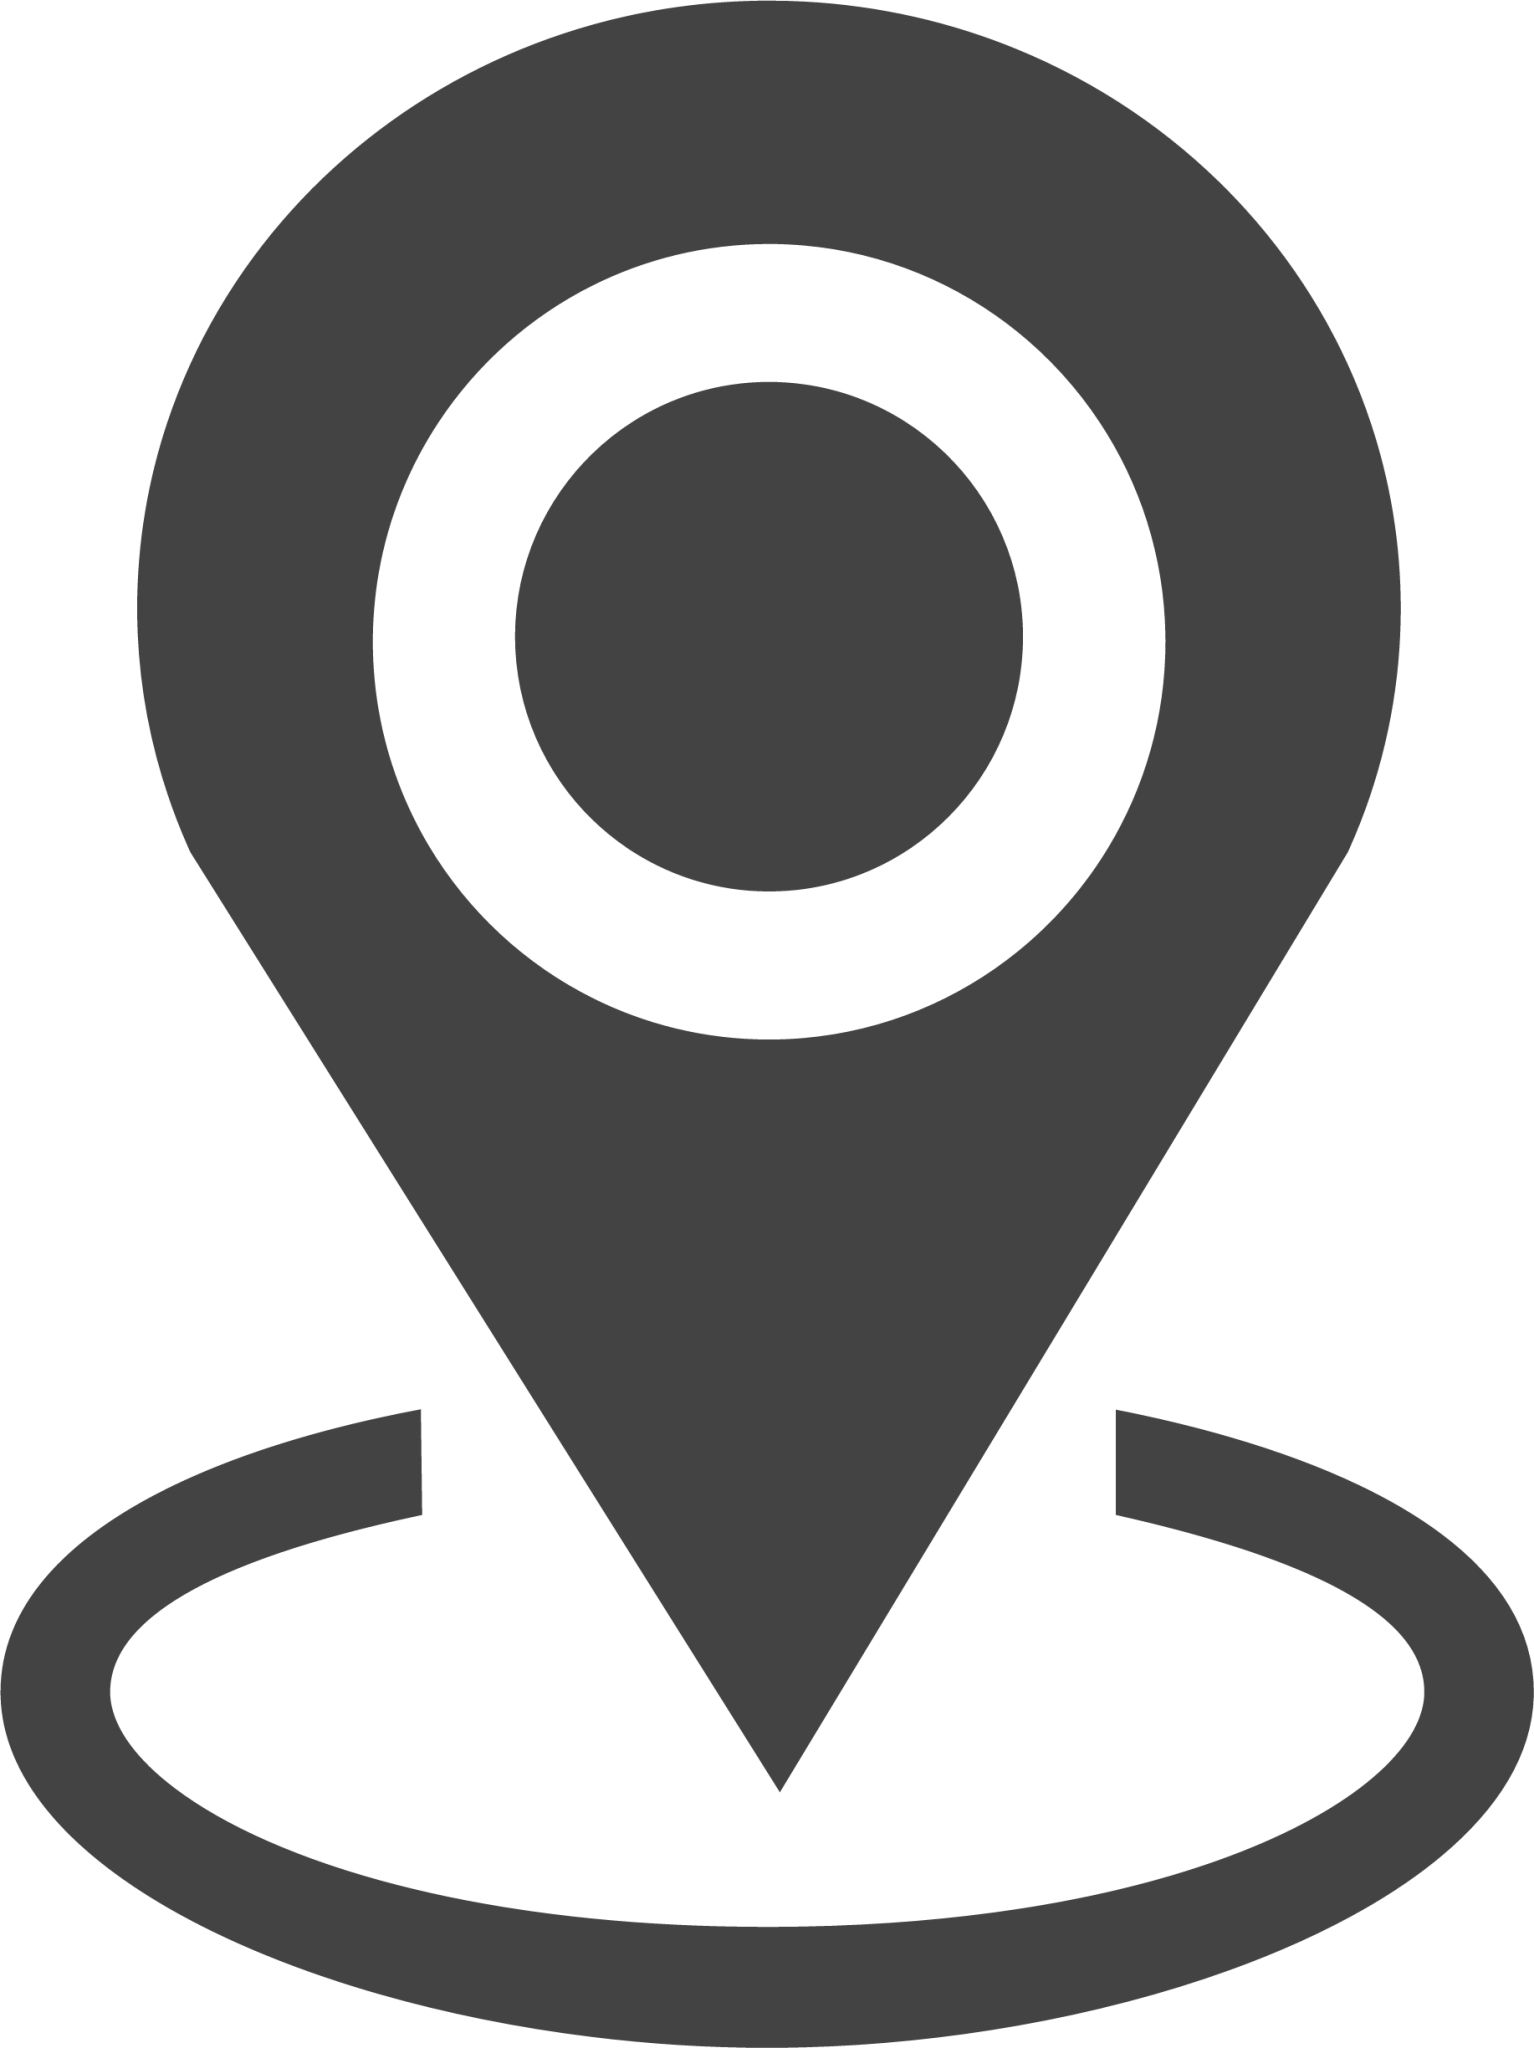 pin location 2 icon